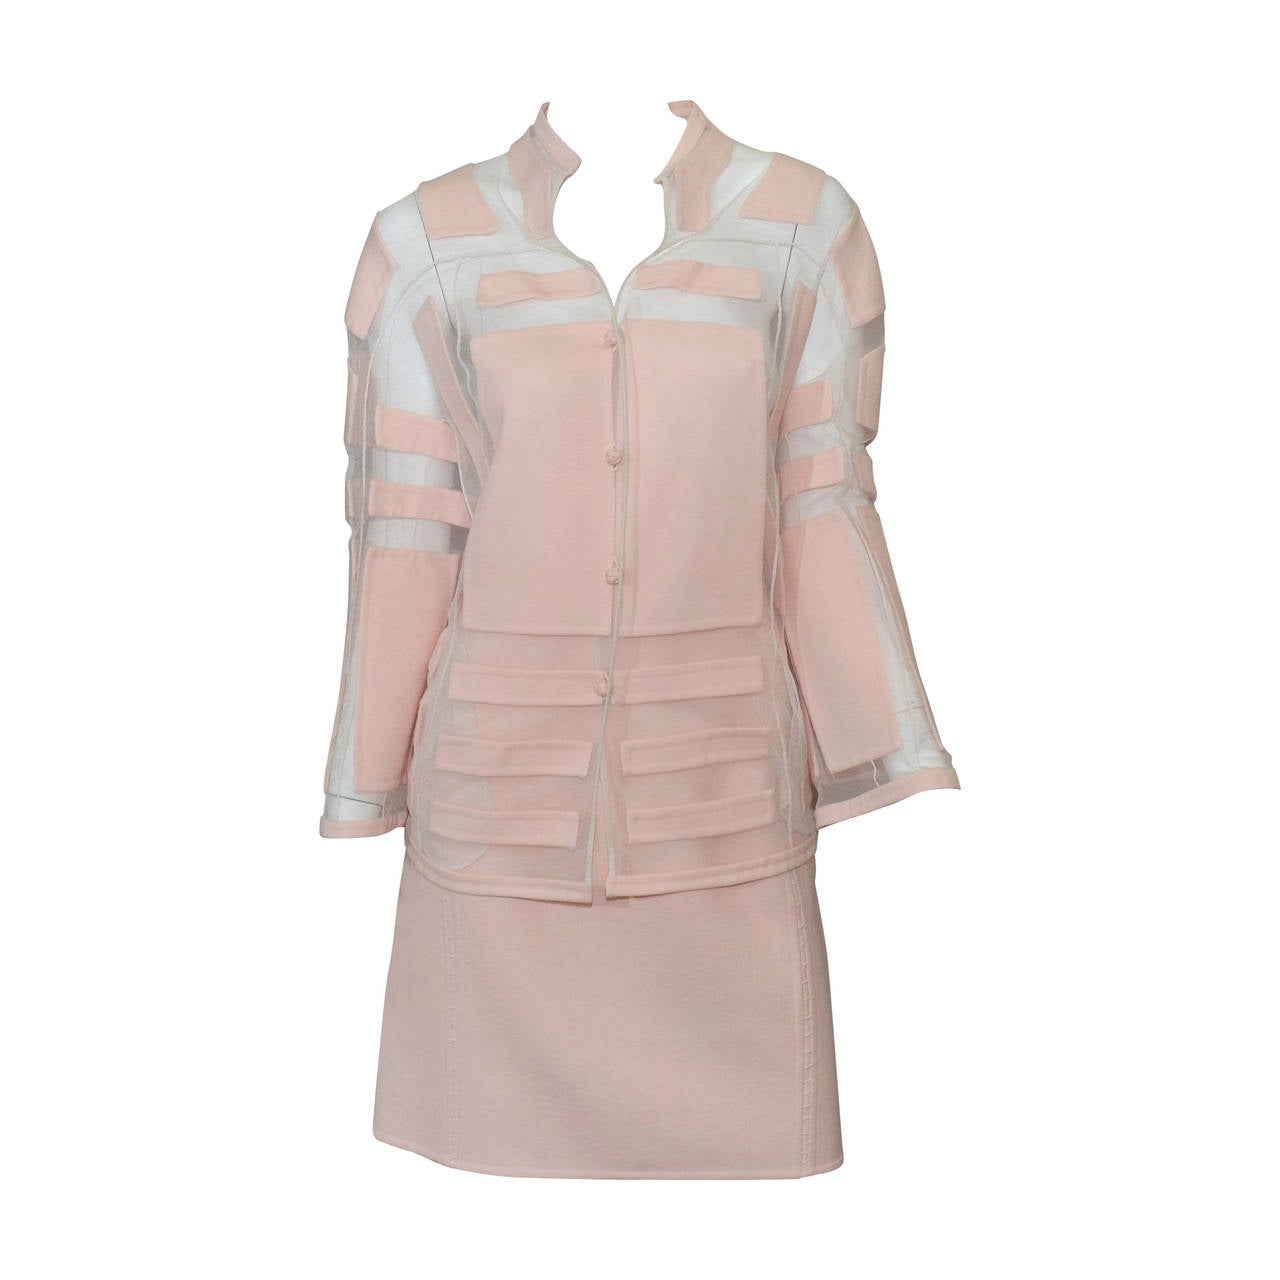 Chado Ralph Rucci Pale Pink Jacket Skirt Suit Set